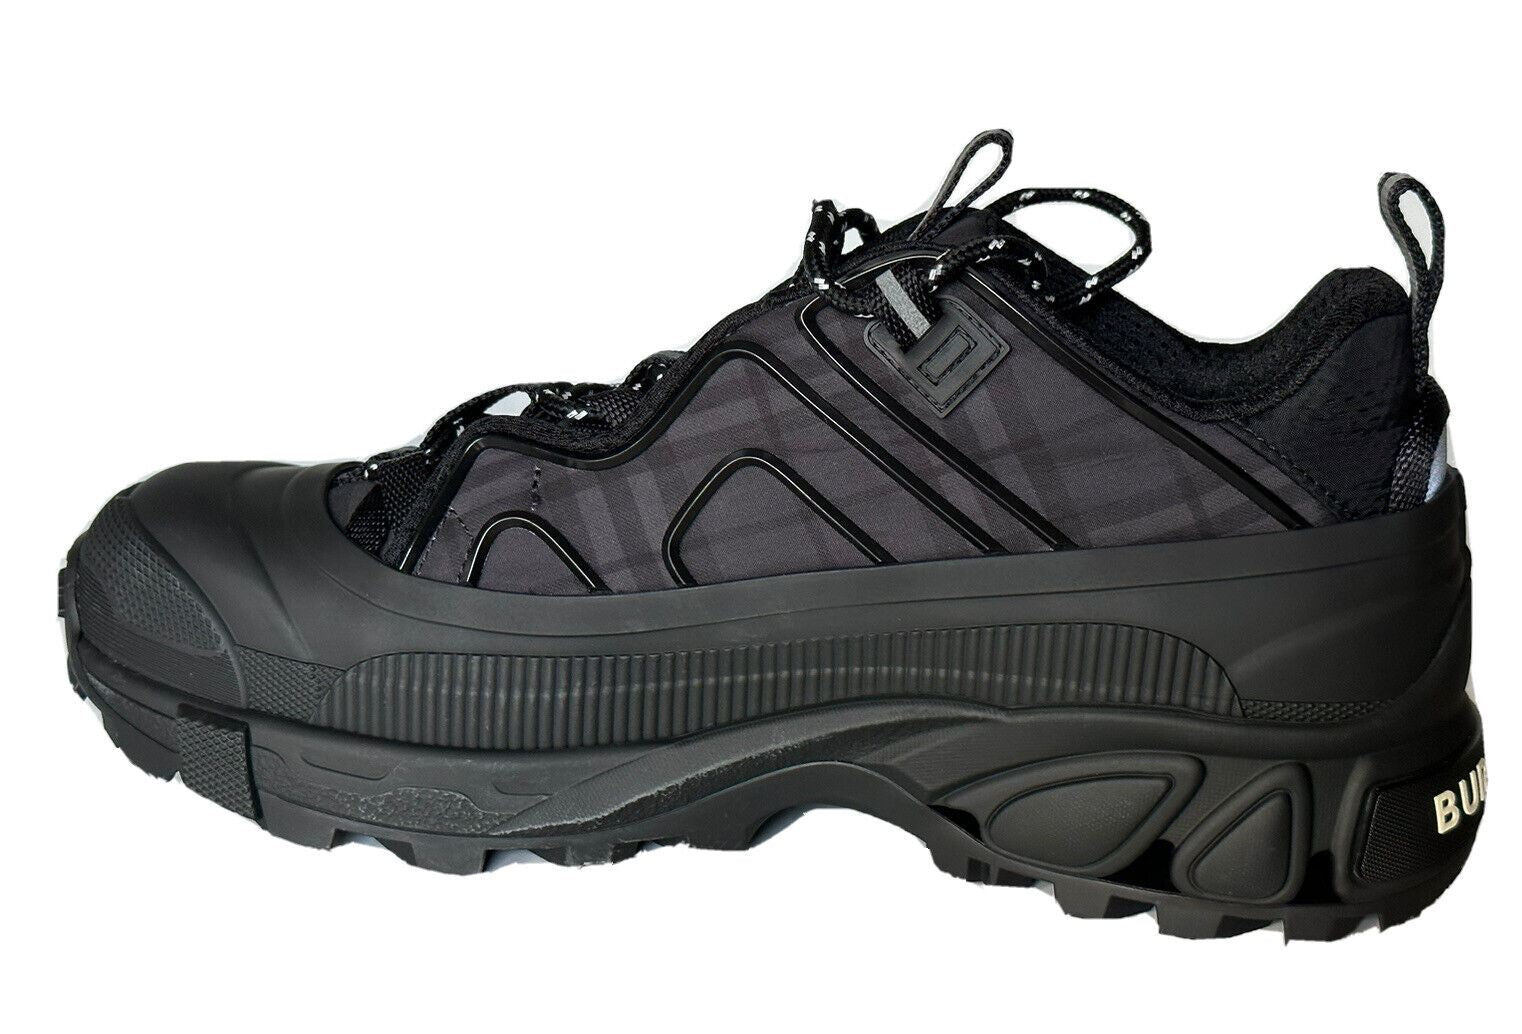 NIB $890 Burberry Herren Arthur Dark Charcoal Sneakers 9 US (42 Euro) 8042584 IT 